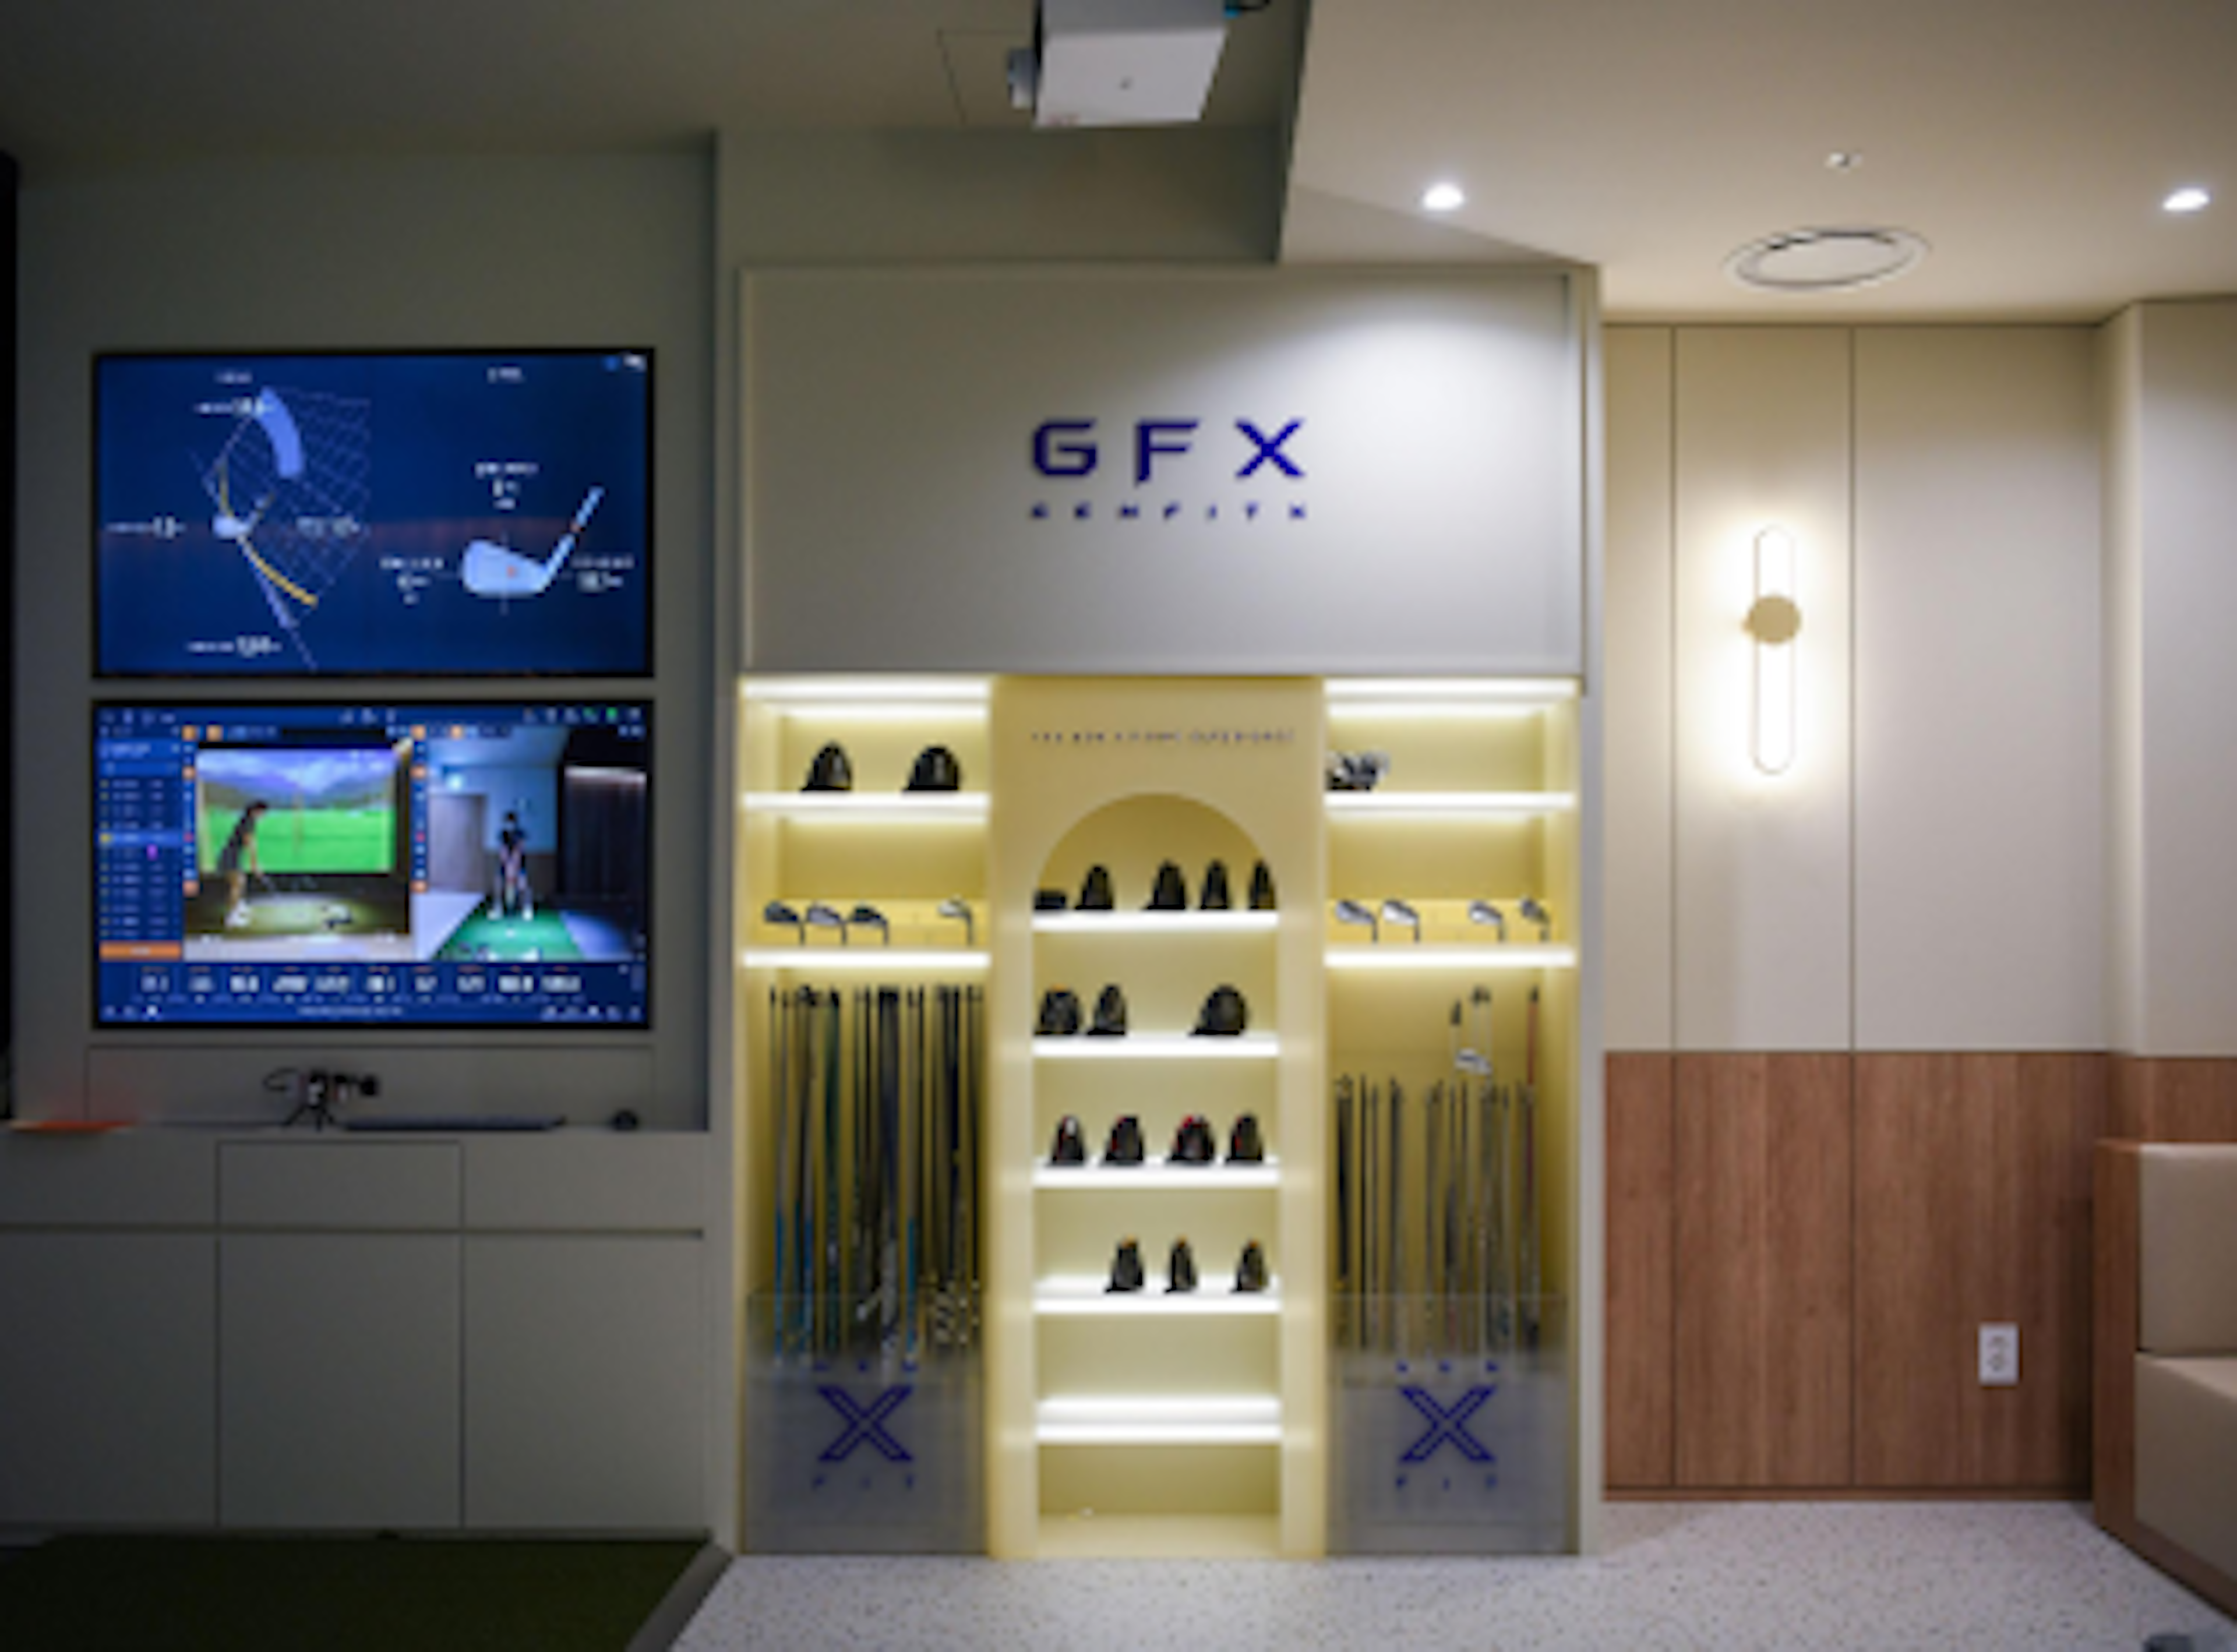 genfitx-store